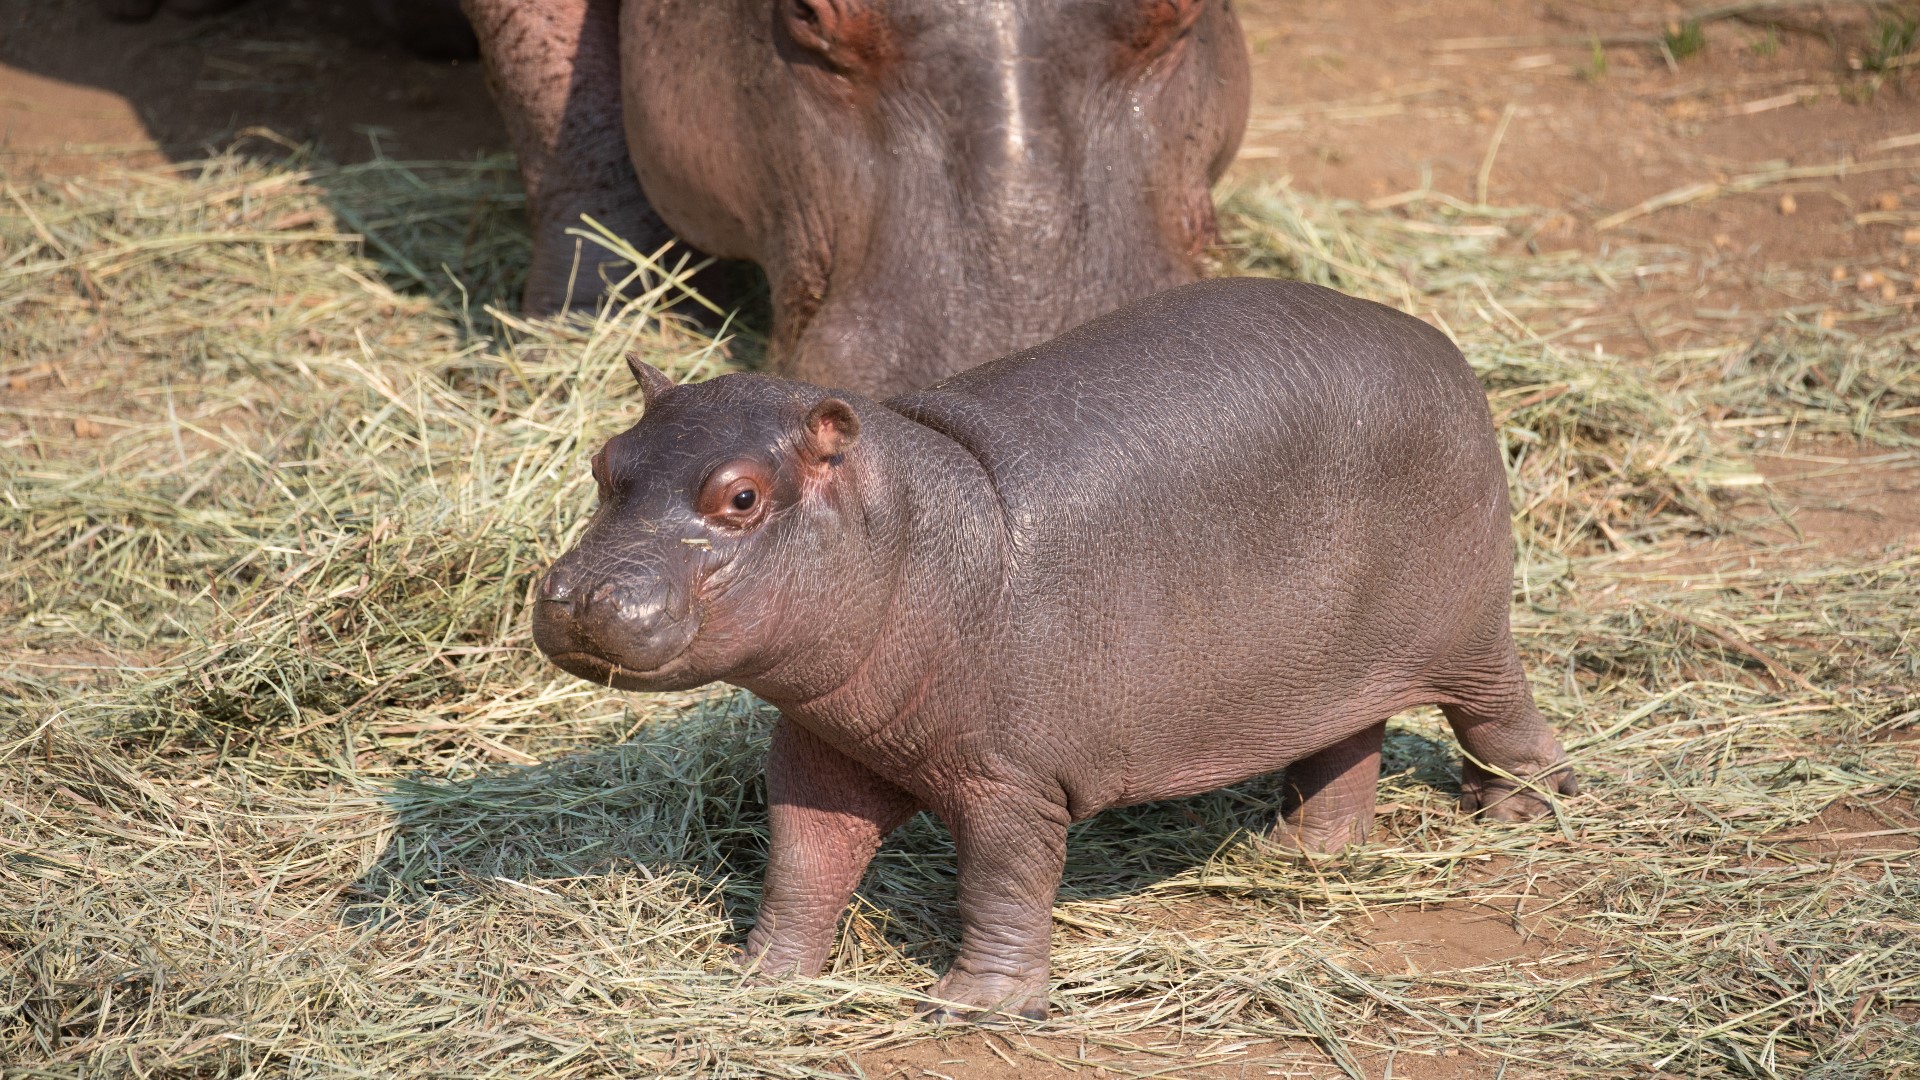 Meet Cheyenne Mountain Zoo's baby hippo, born July 20, 2021.